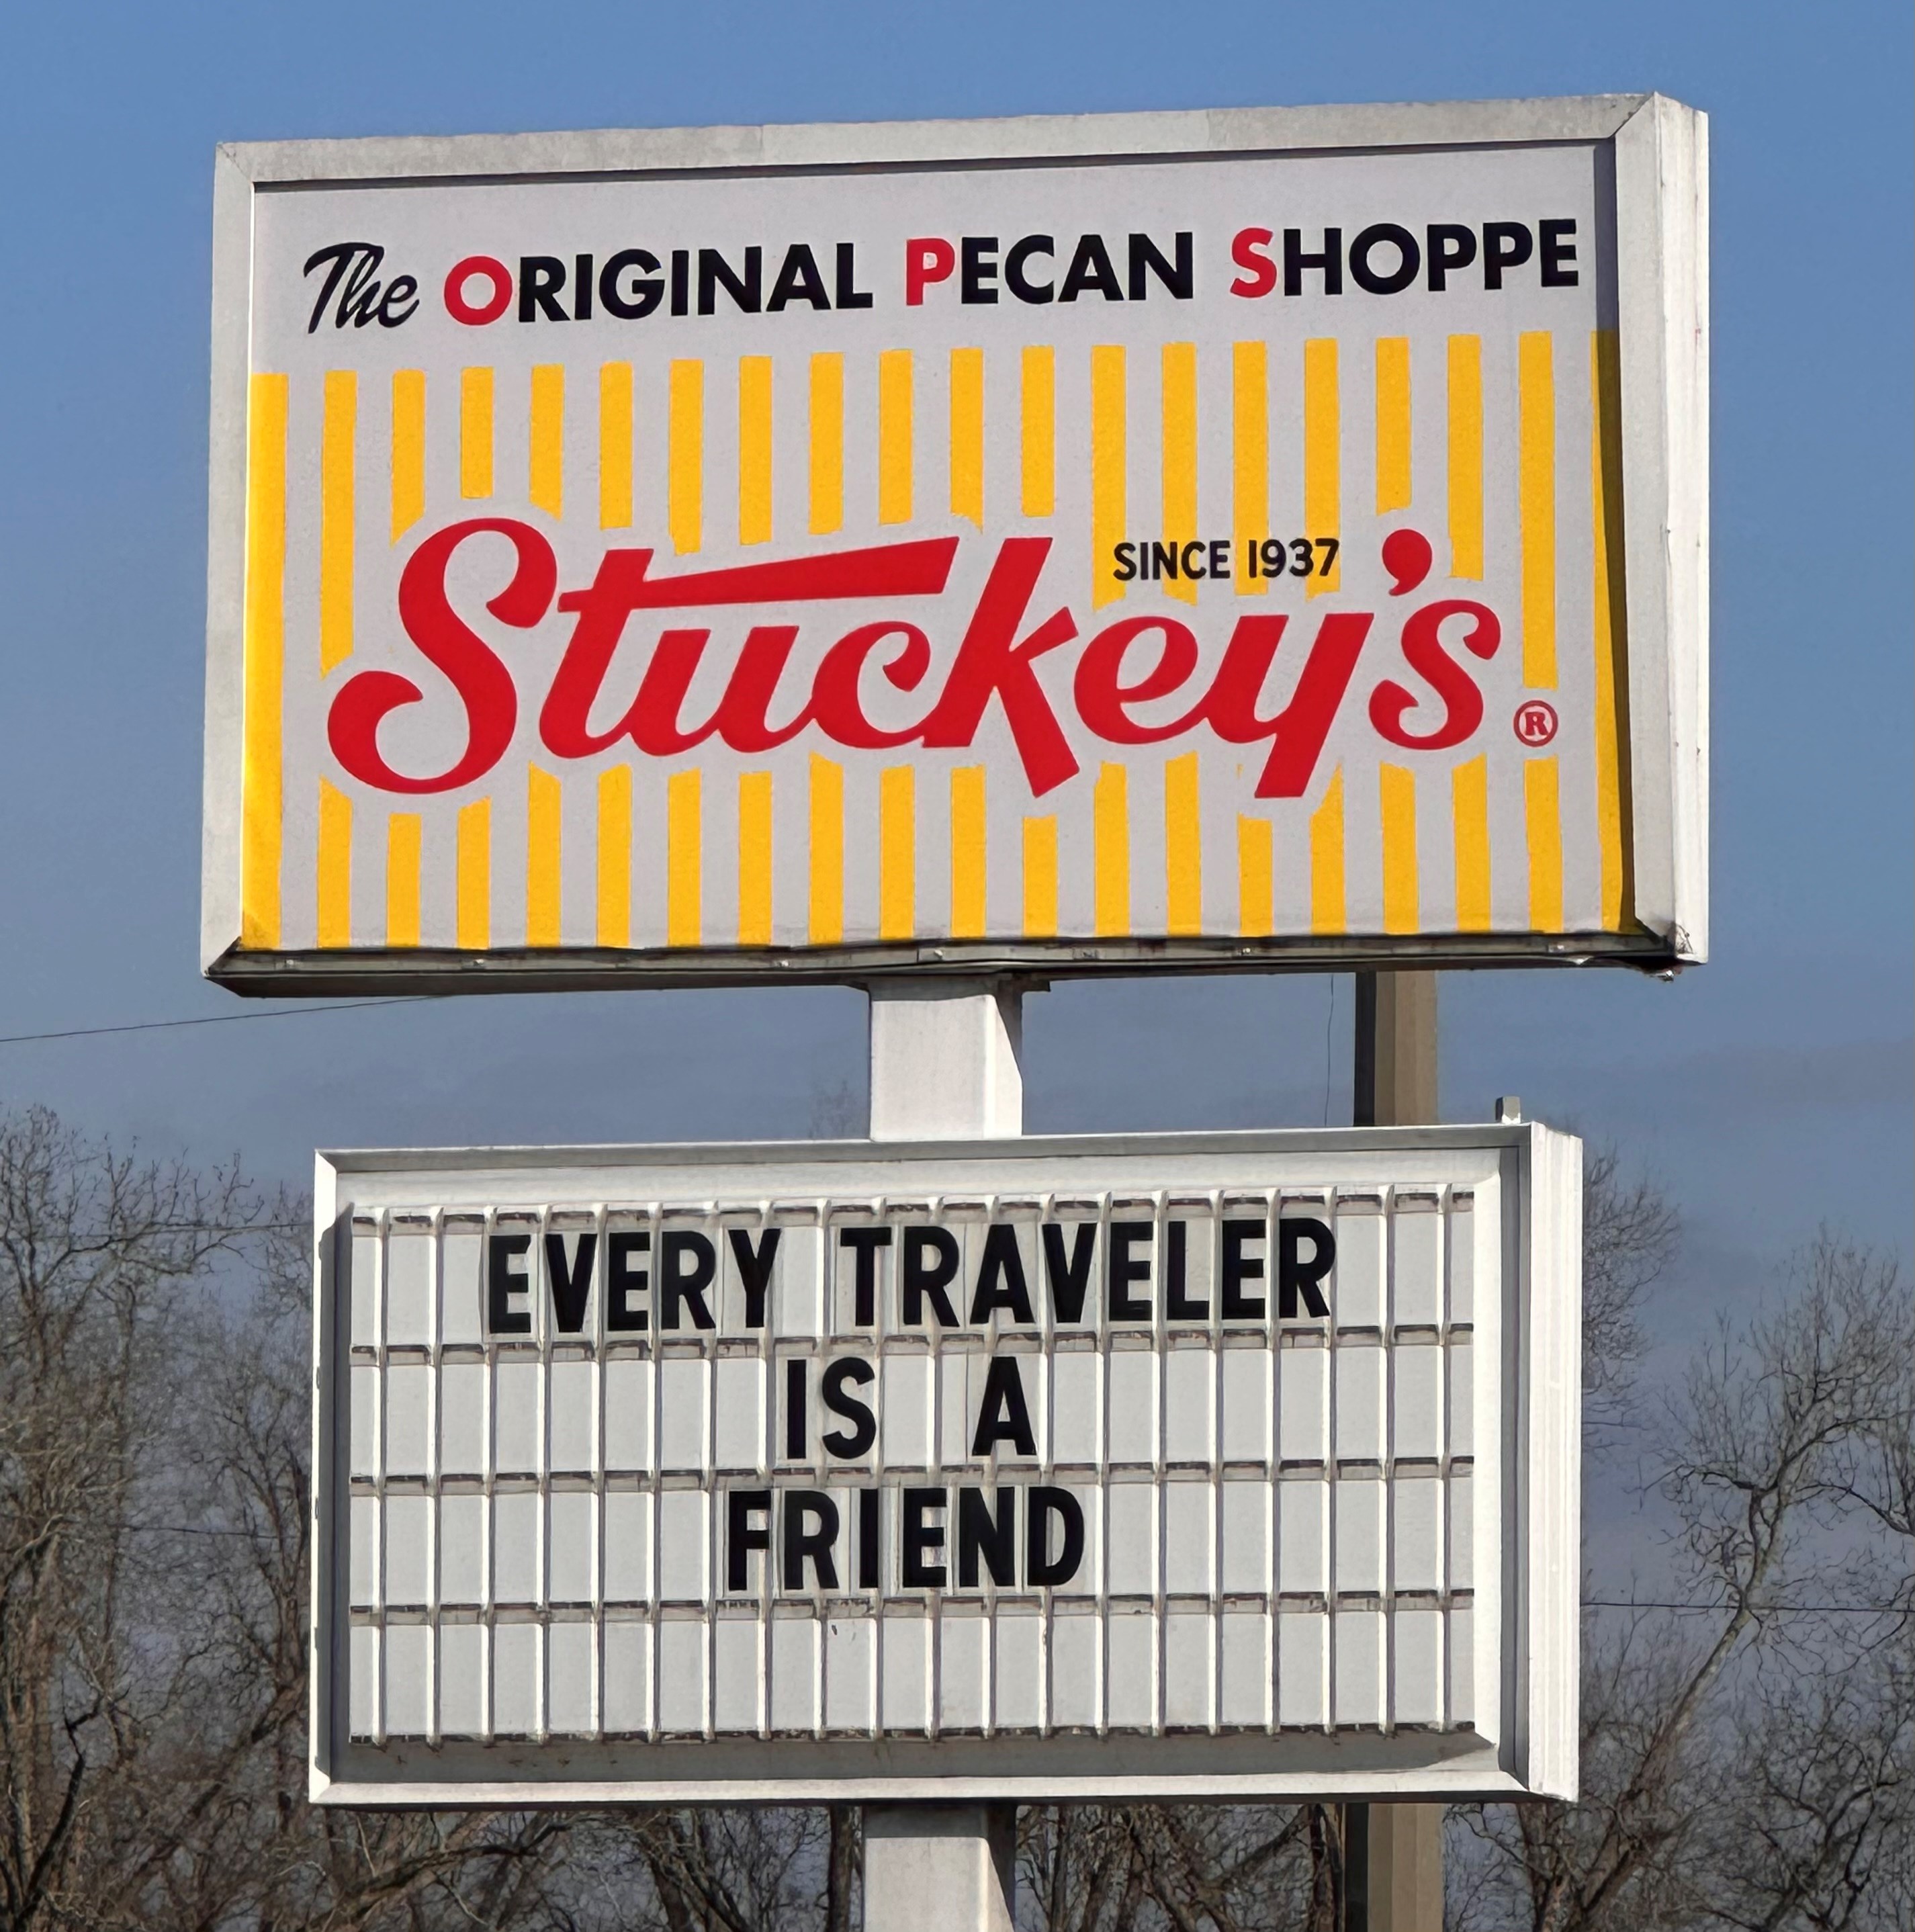 The Original Pecan Shoppe - Stuckey's